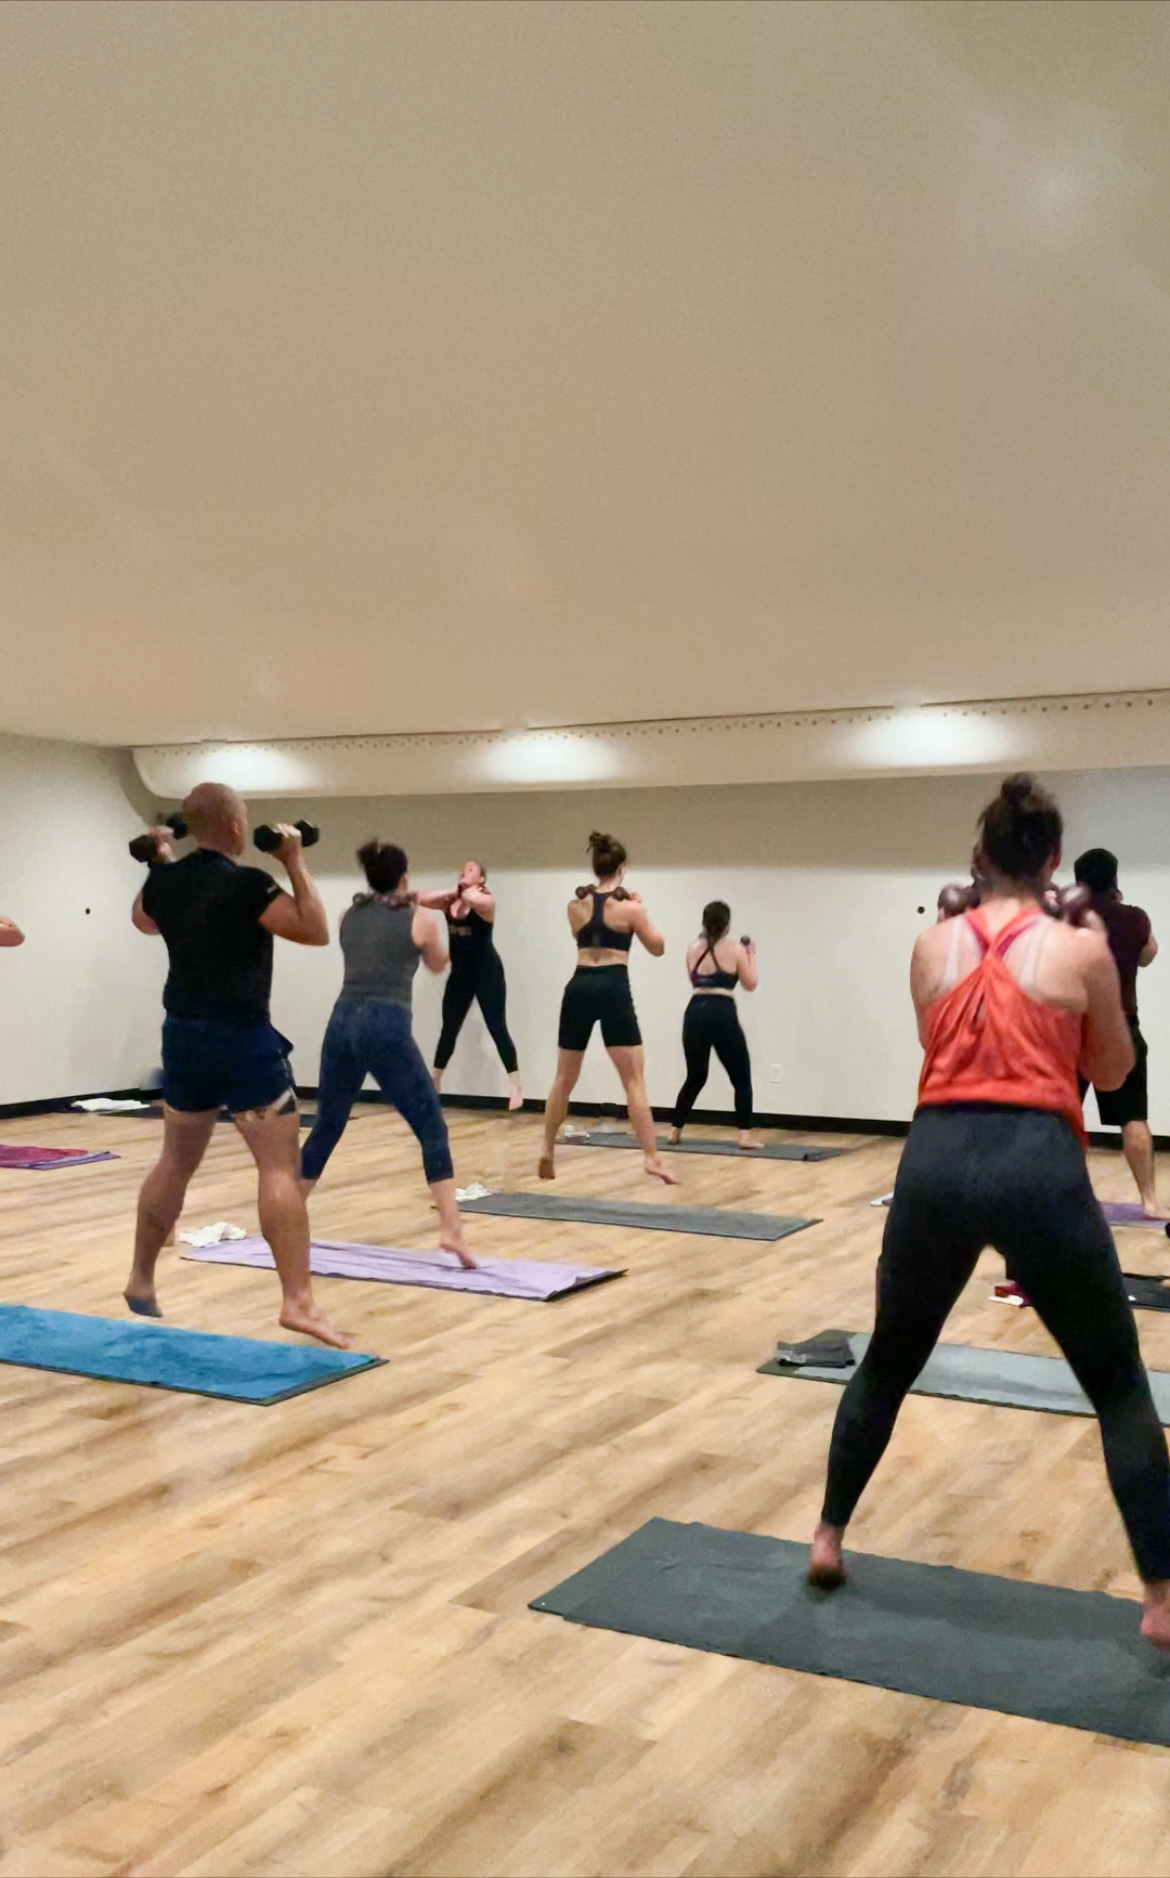 Arrichion Hot Yoga + Circuit Training Durham